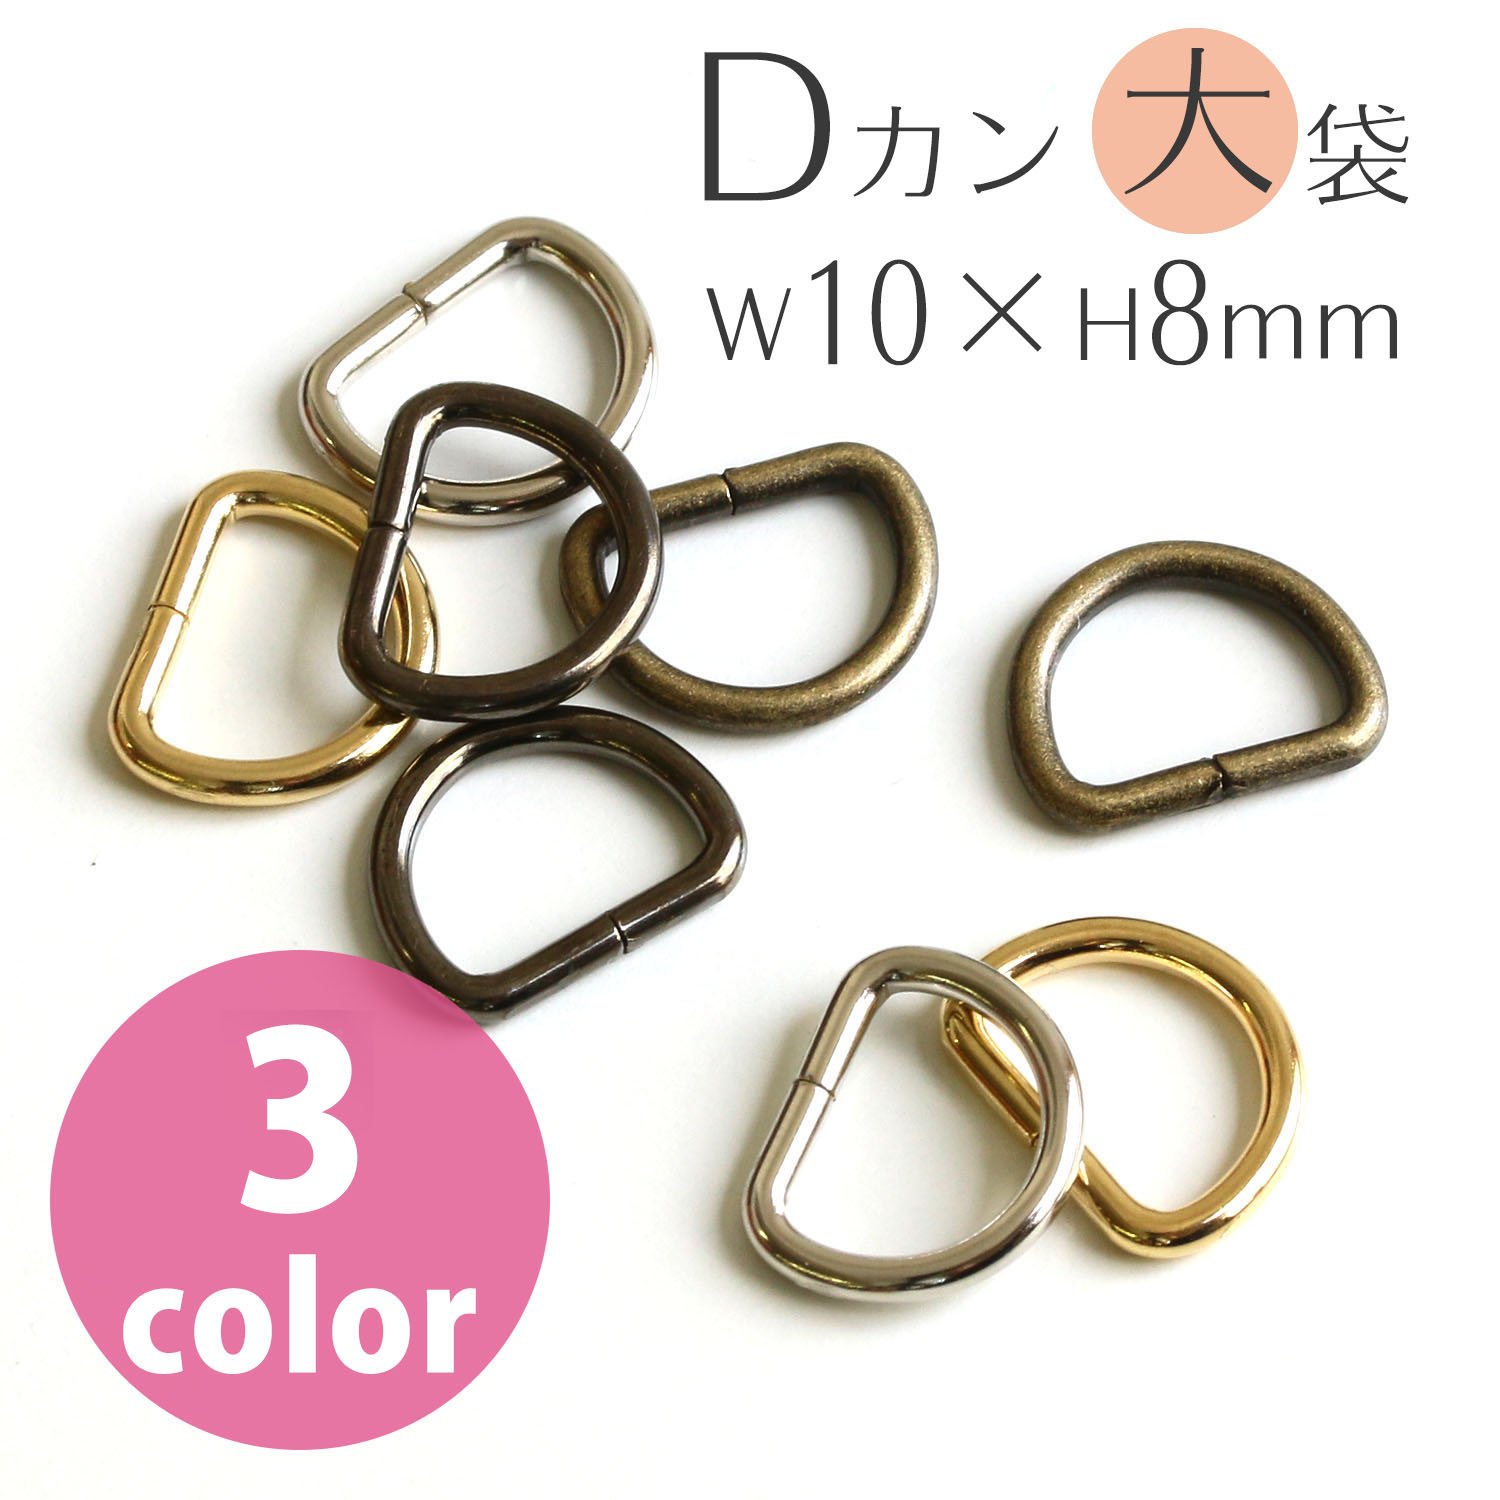 S22 D-Ring  10 x 8mm", diameter 1.8mm 120pcs (bag)